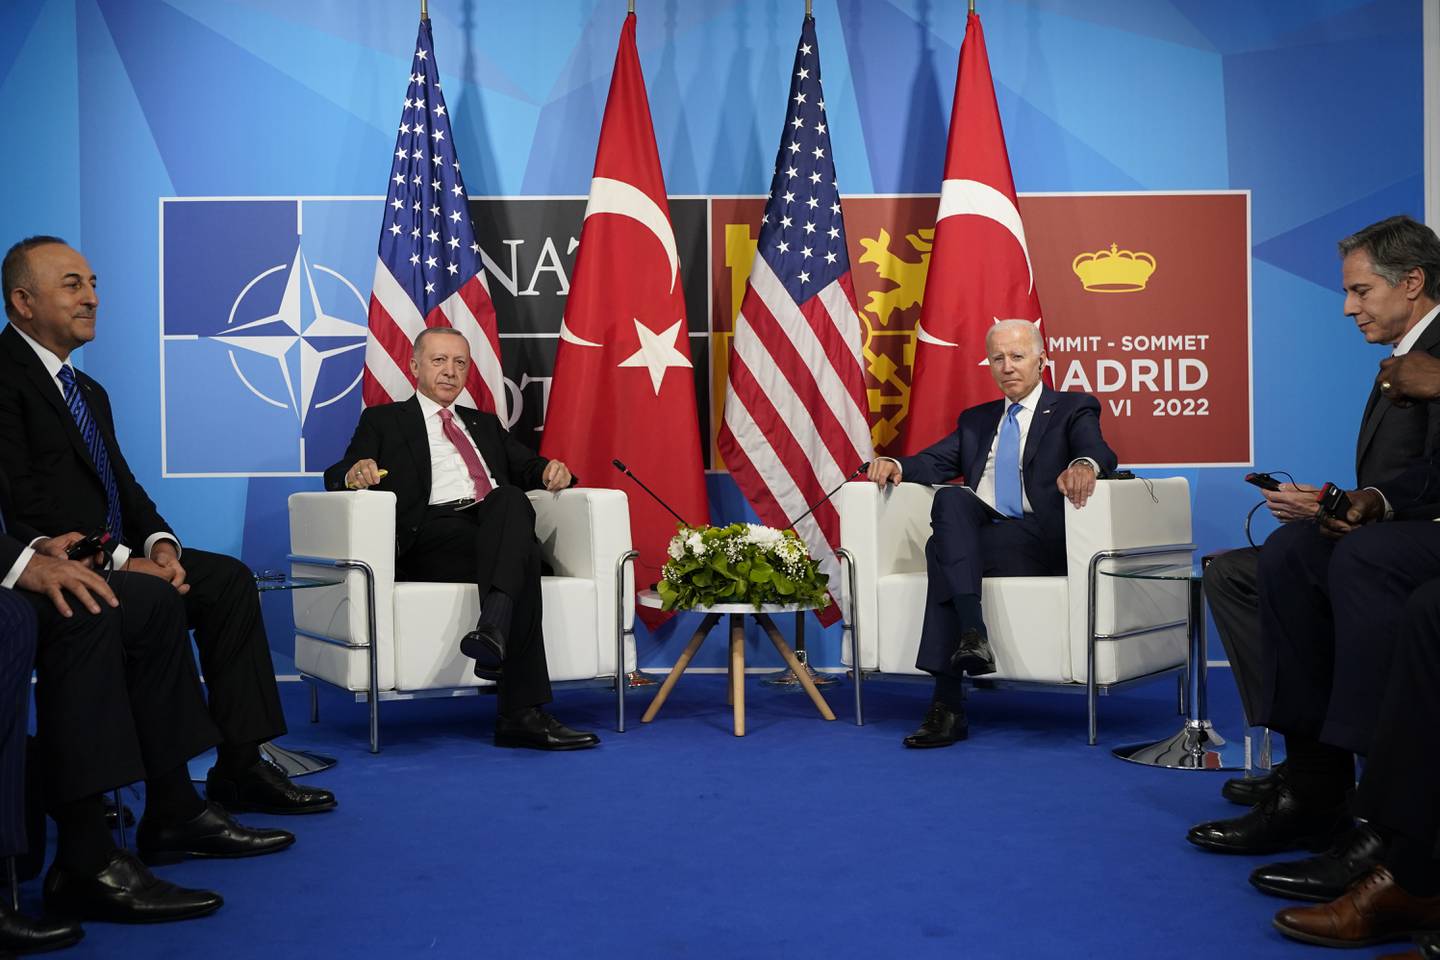 US President Joe Biden meets Turkish President Recep Tayyip Erdogan during the Nato summit in Madrid on Wednesday. AP Photo